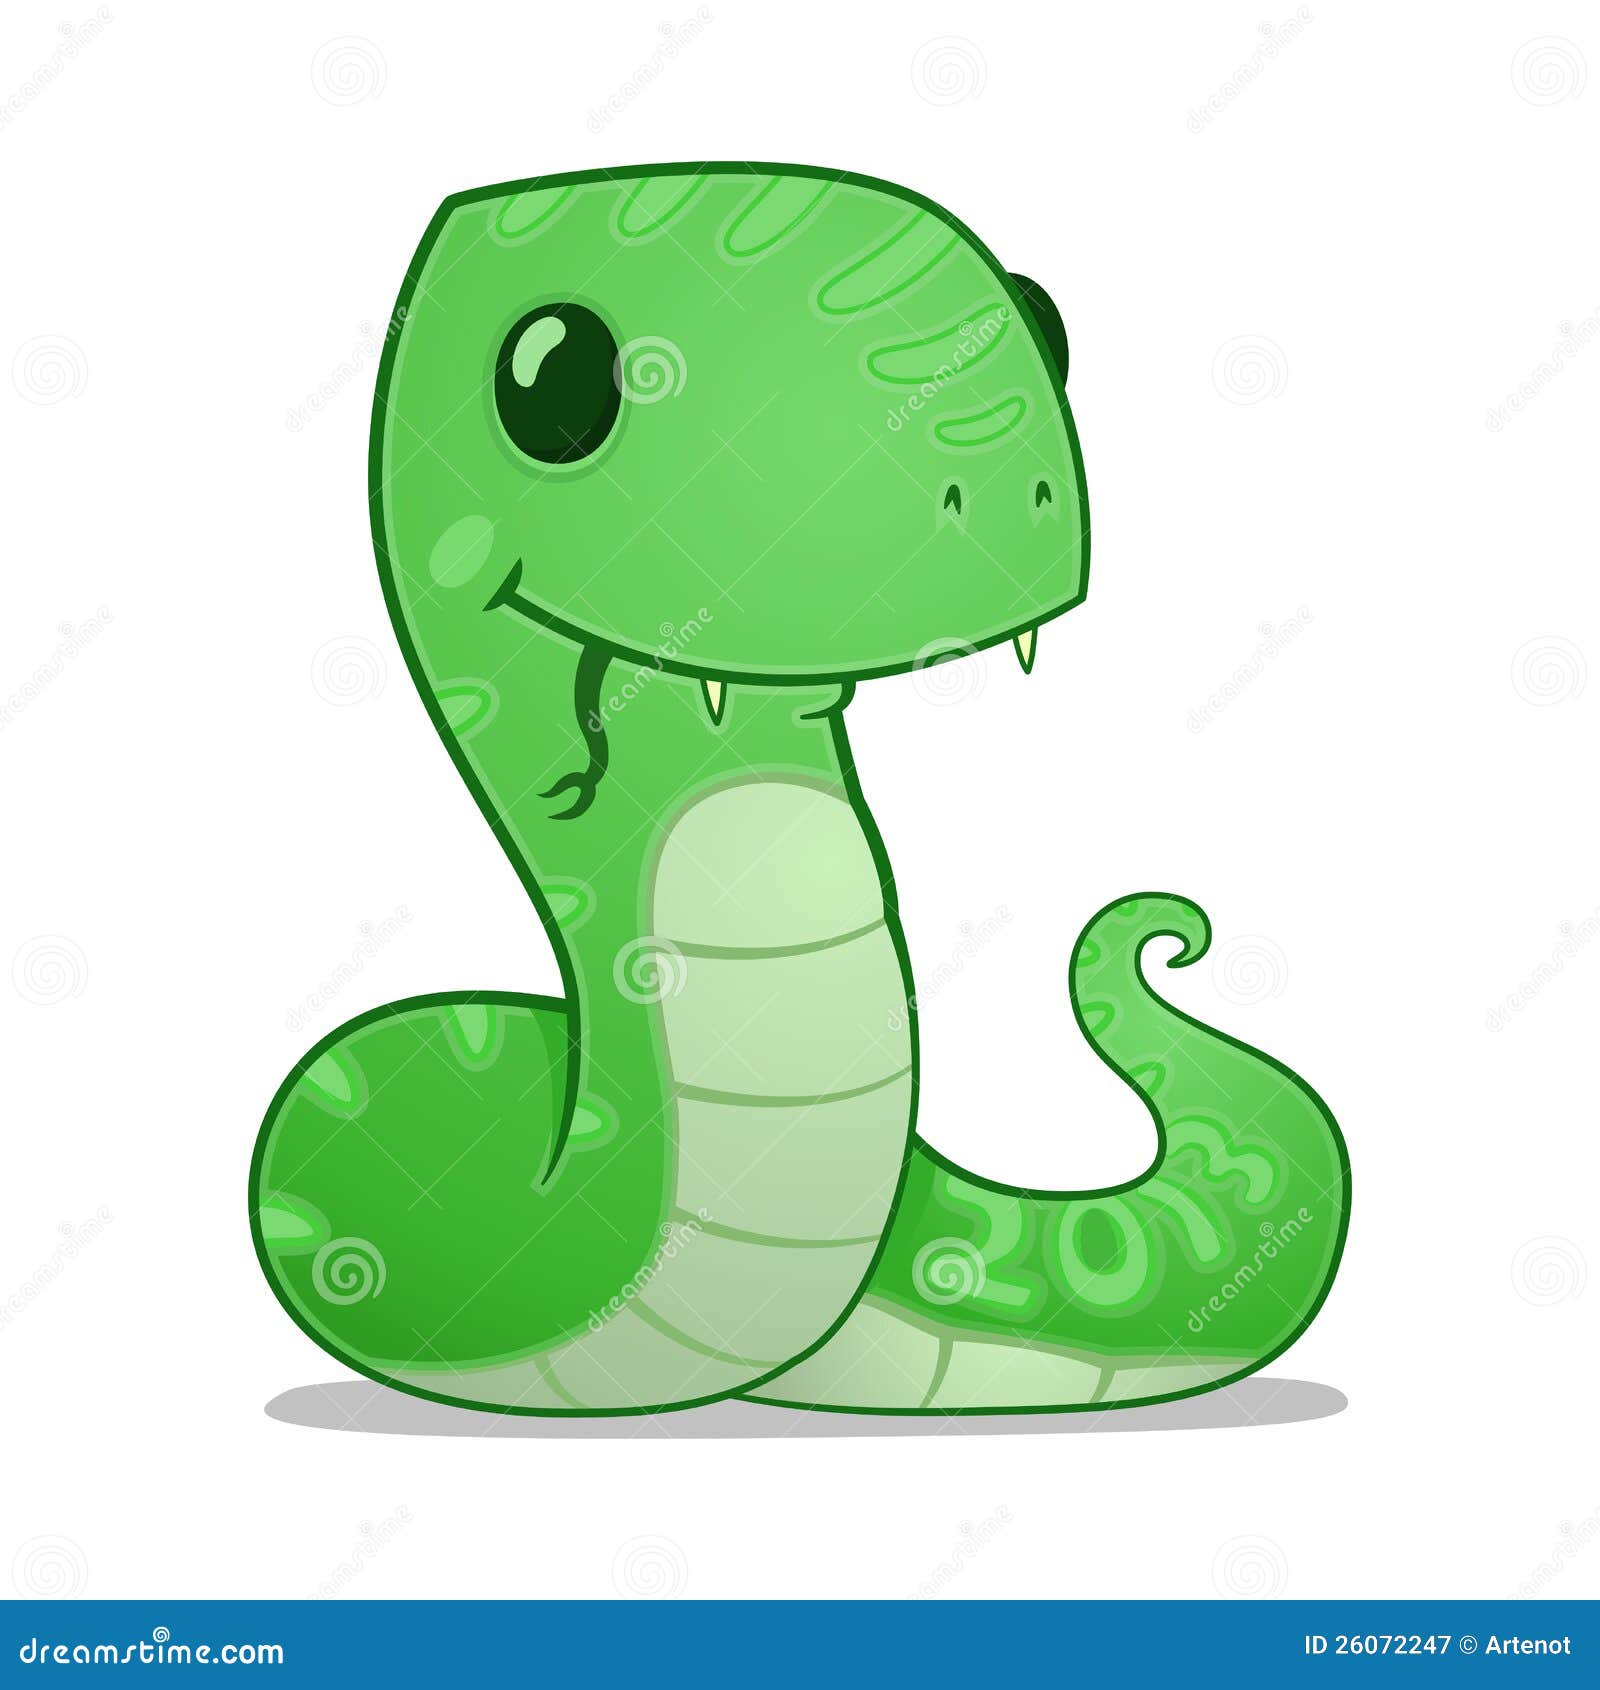 Cartoon snake stock illustration. Image of lifestyles ...